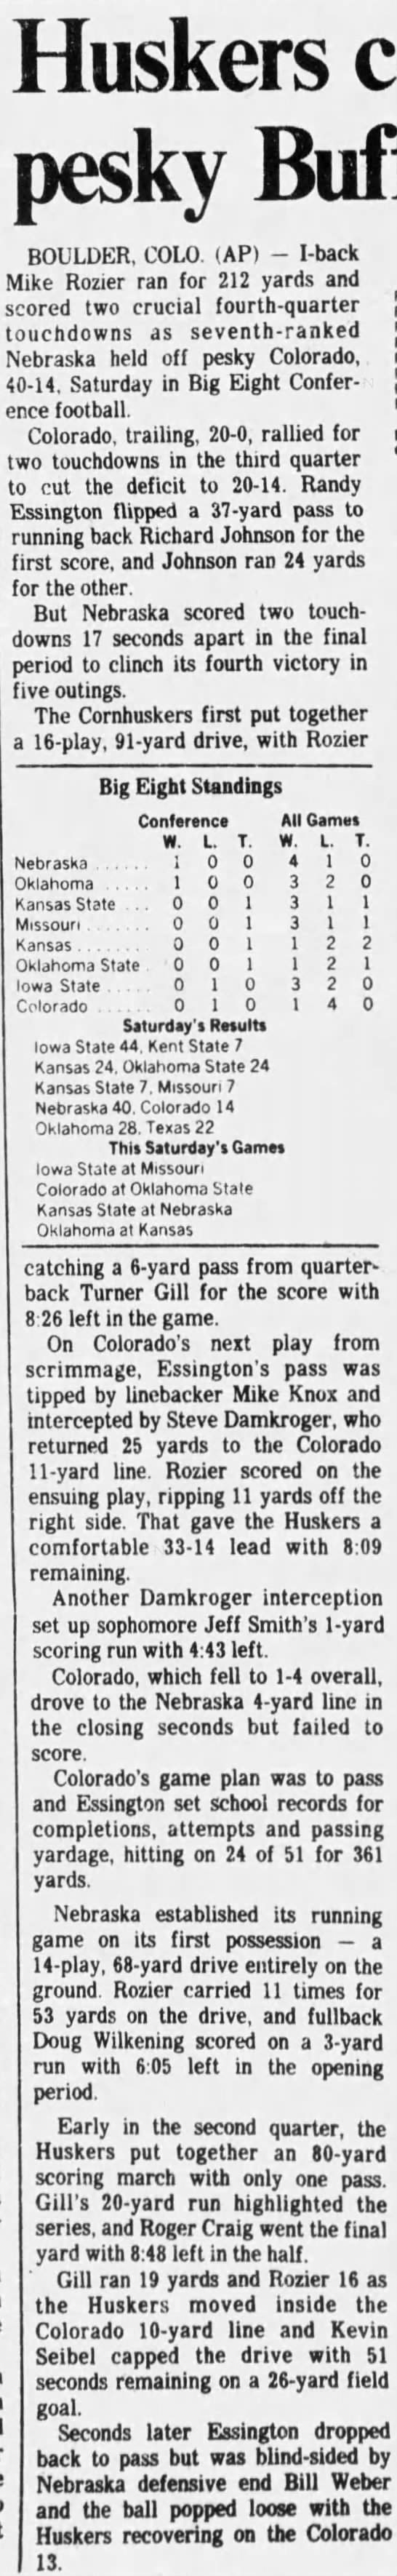 1982 Nebraska-Colorado football AP - 